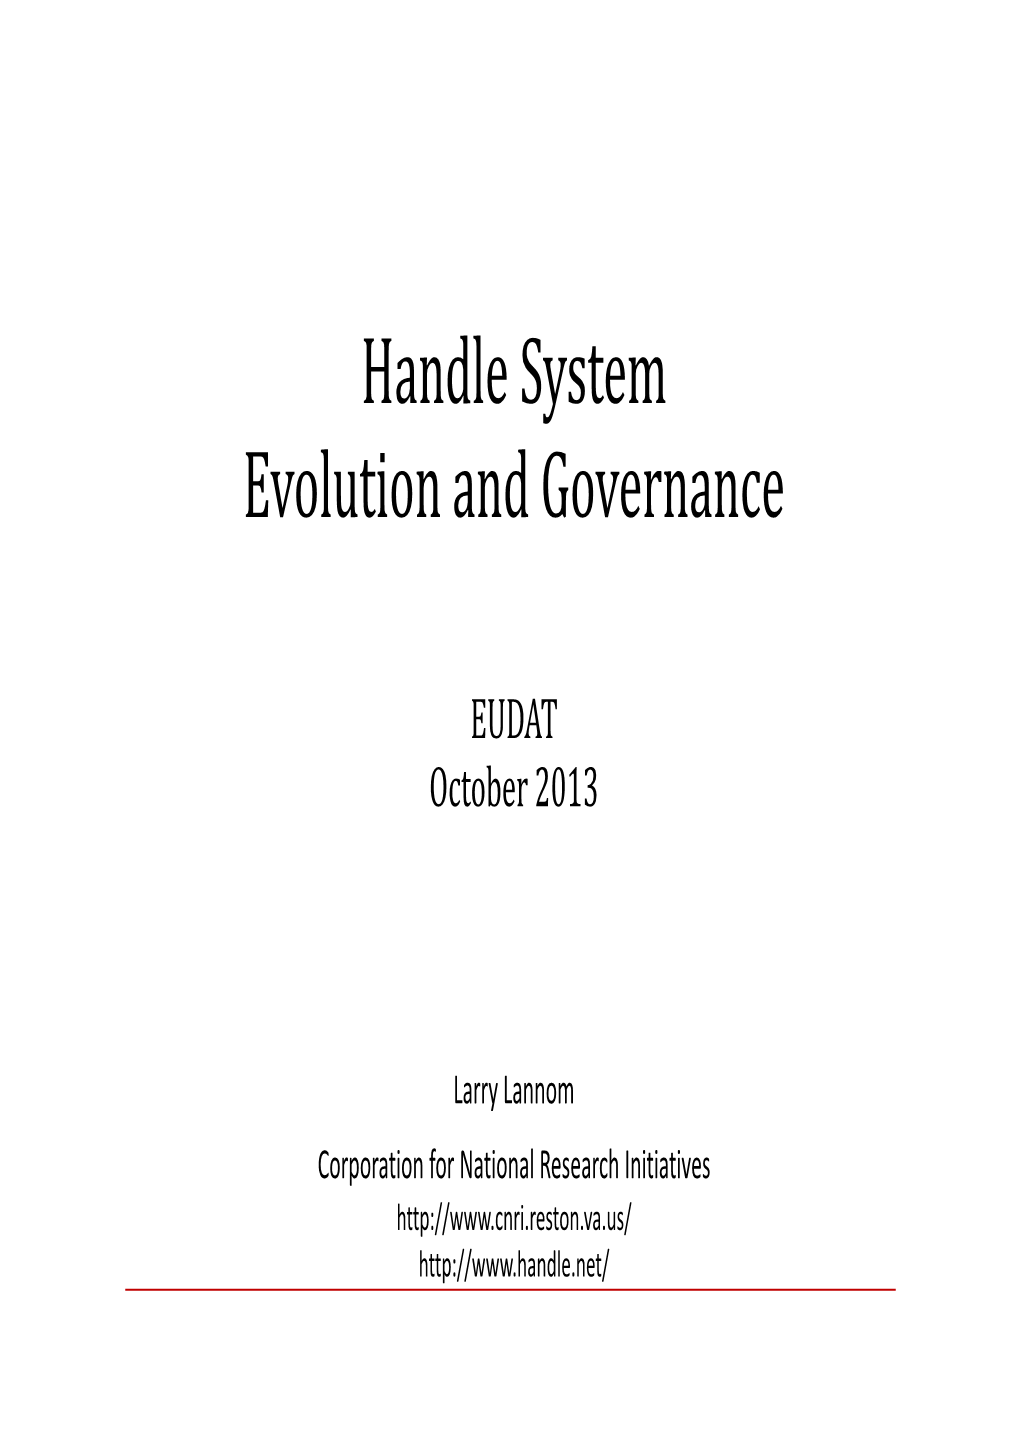 Handle System Evolution and Governance